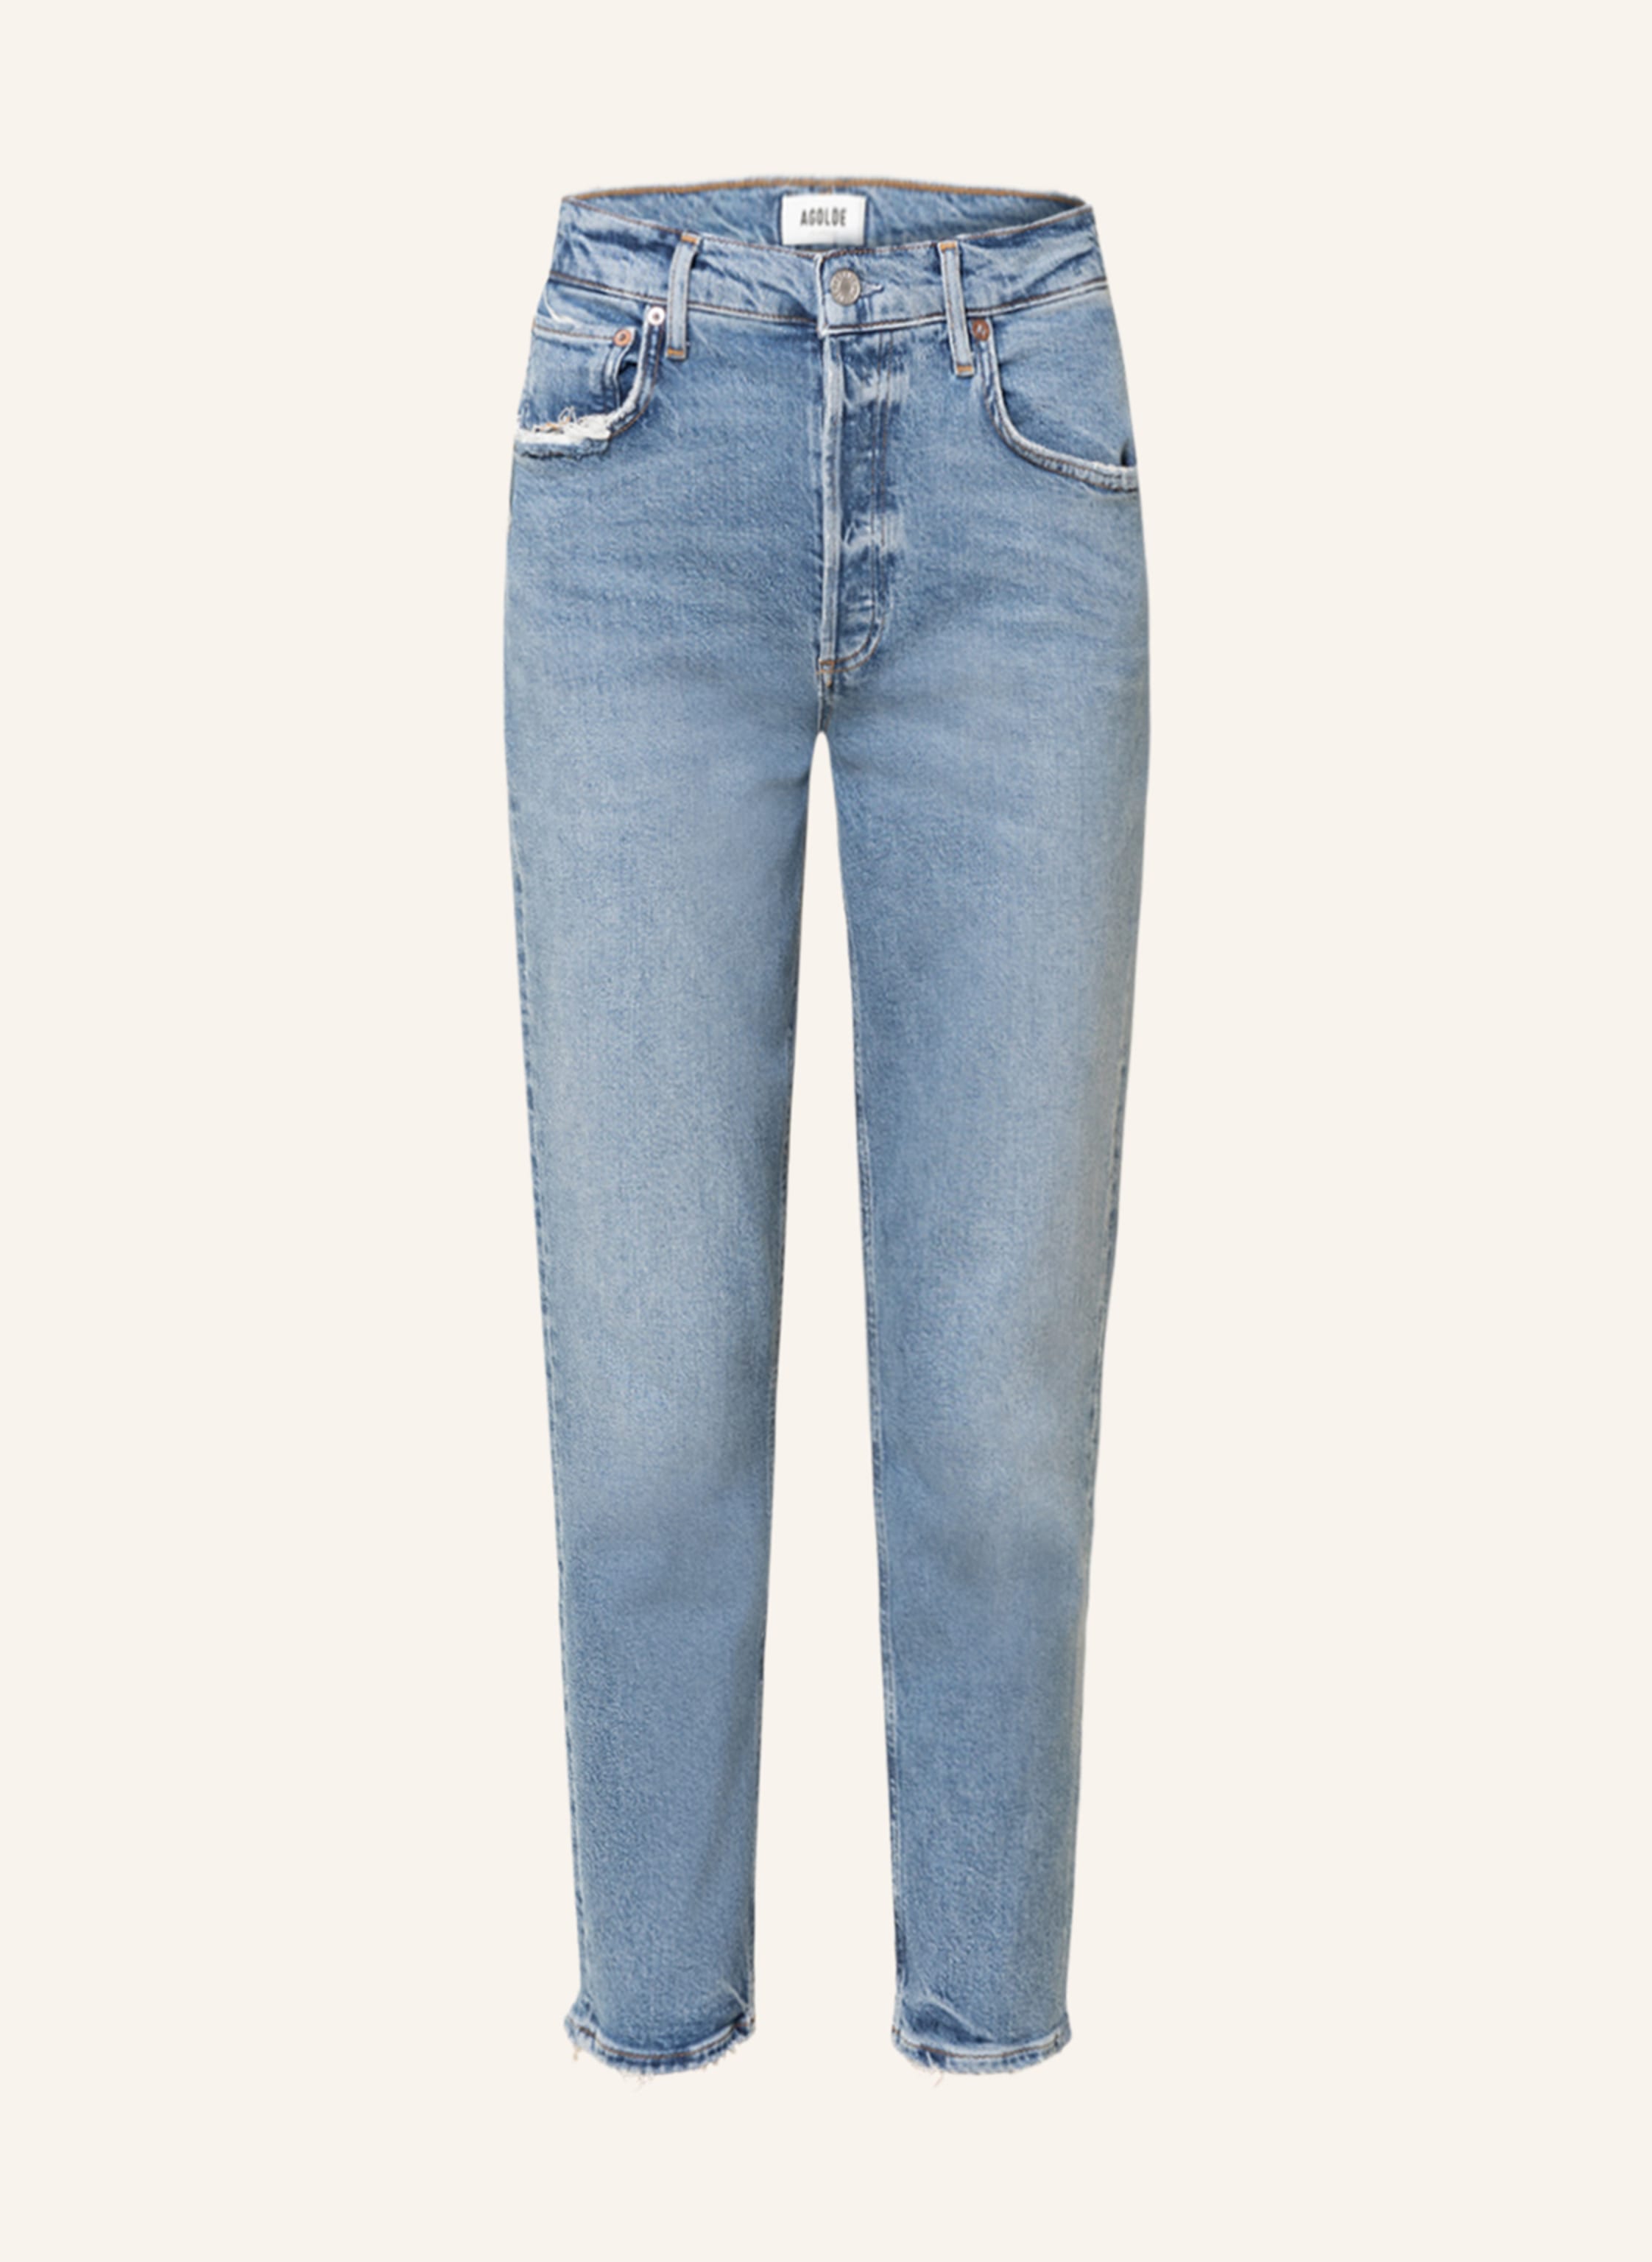 H&M+ Embrace Shape Ankle Jeans - Light blue/Trashed - Ladies